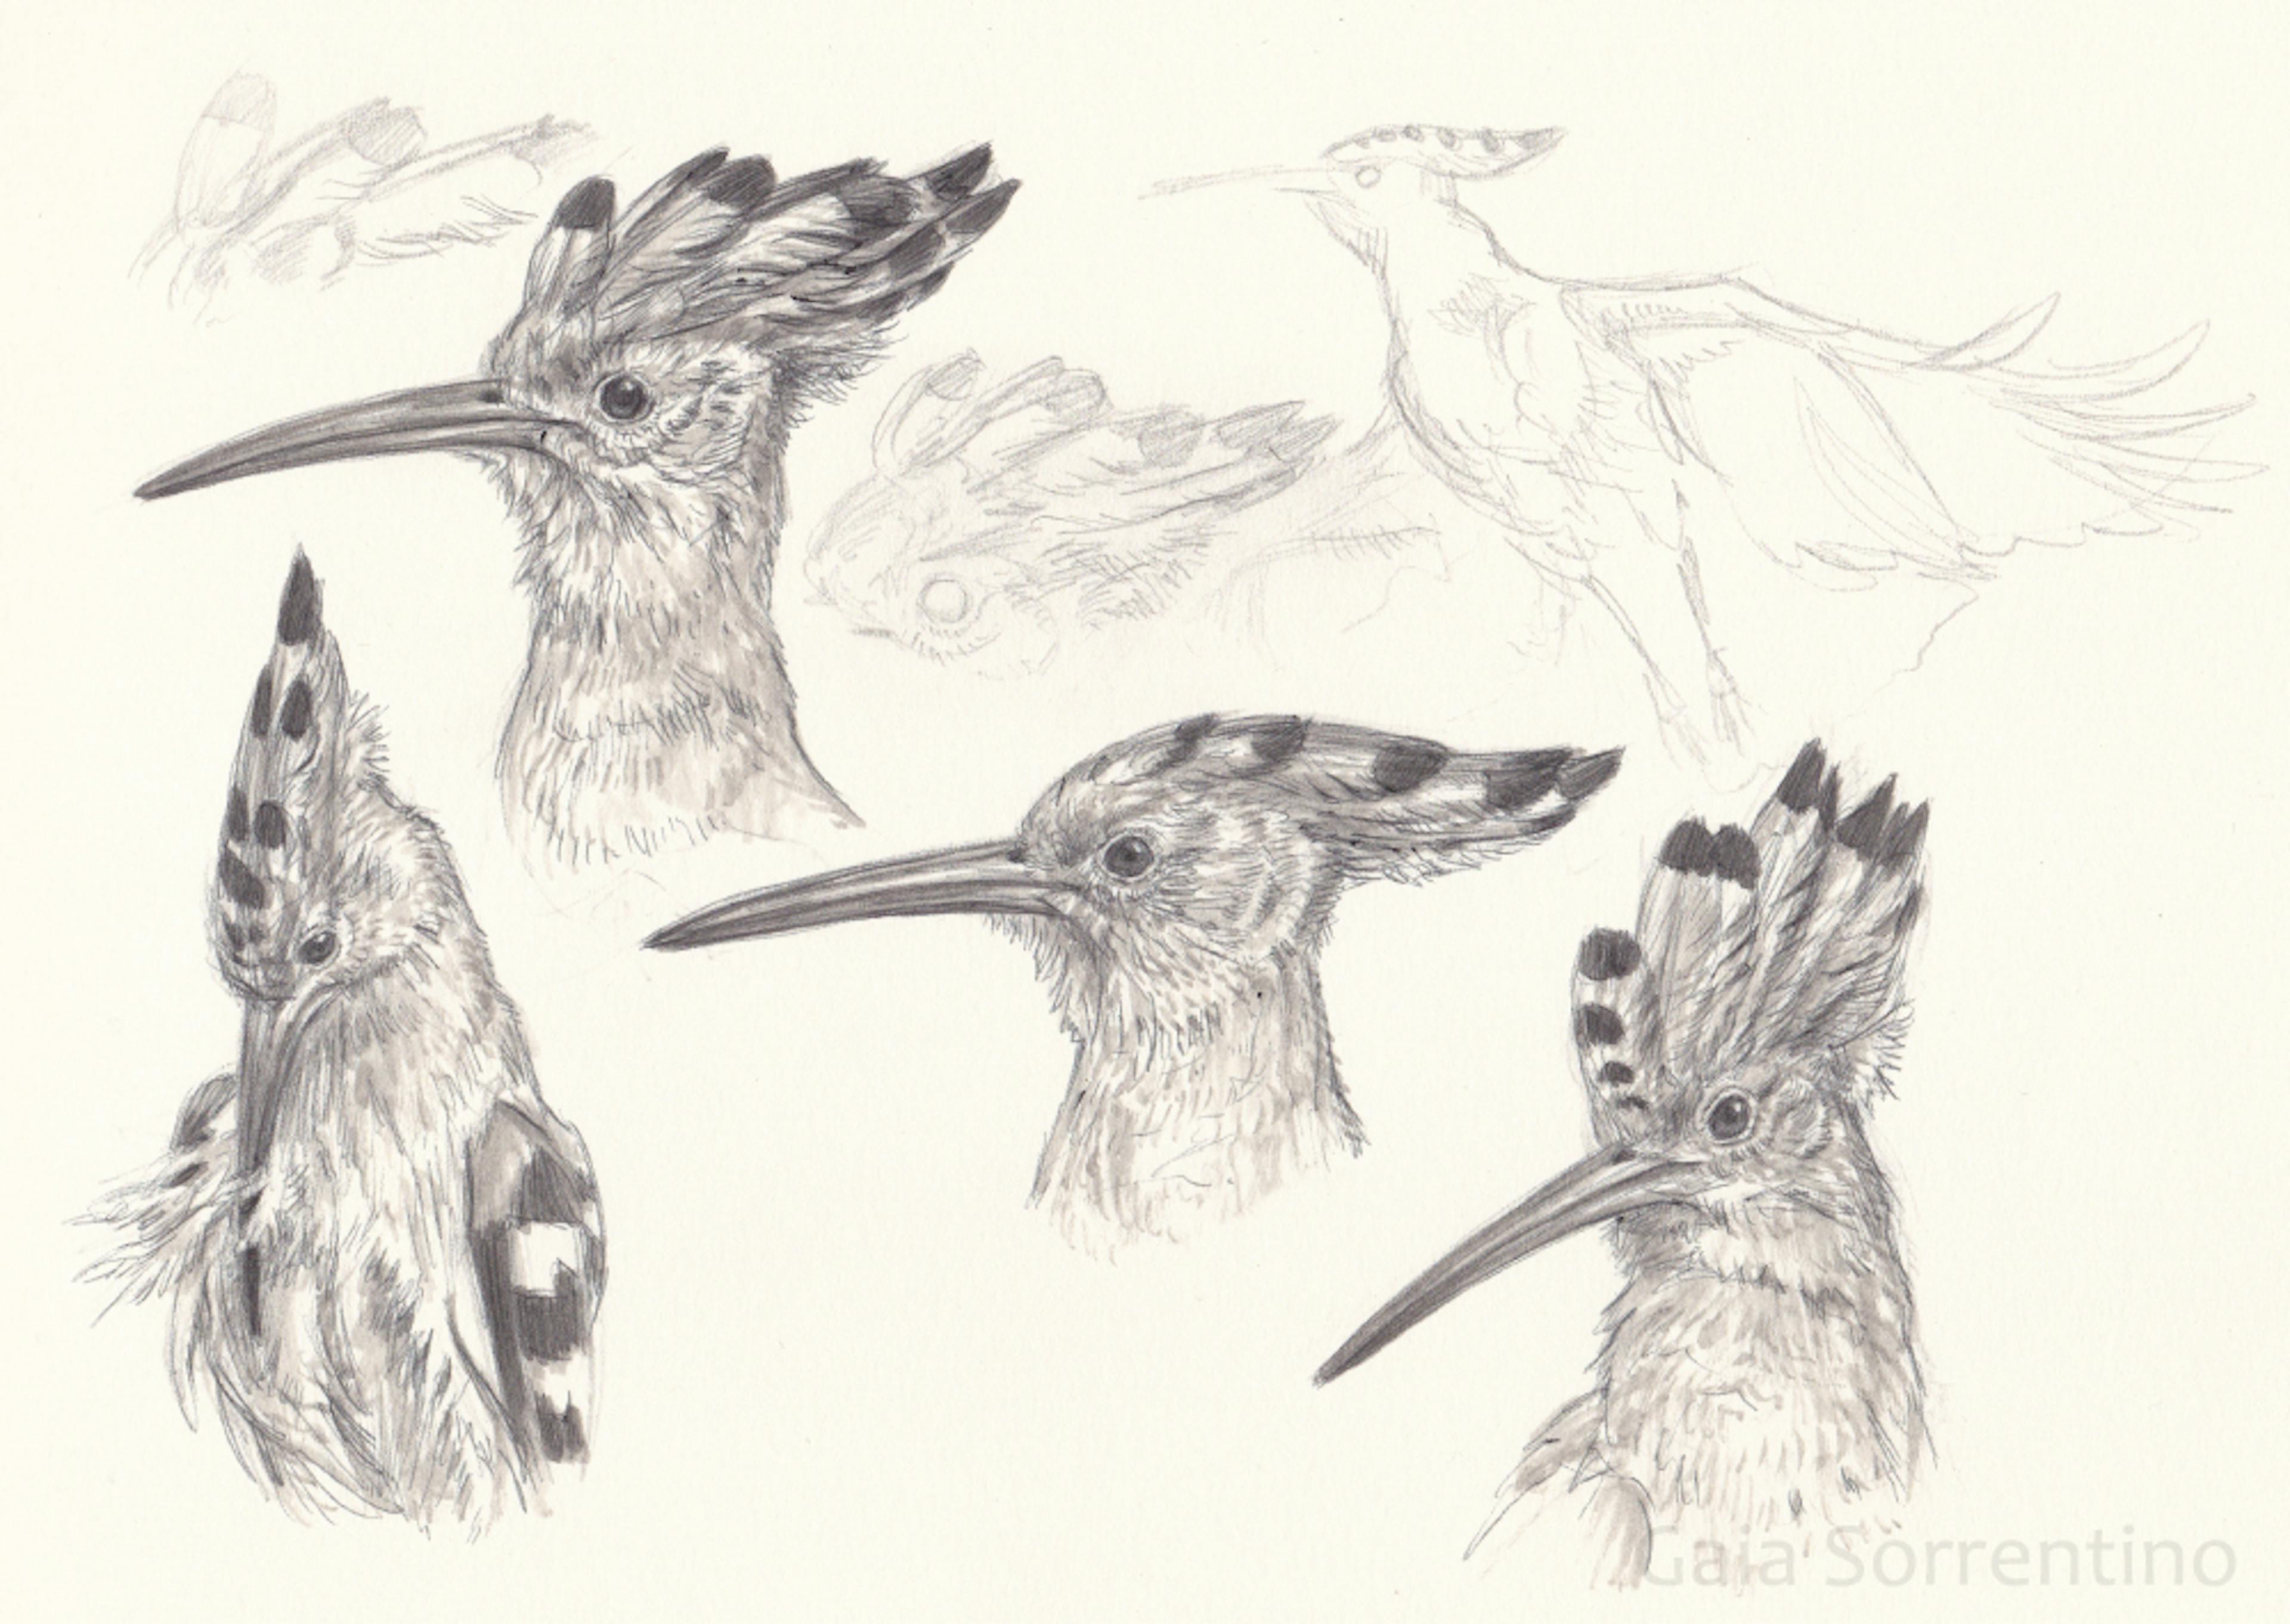 Bird head sketches